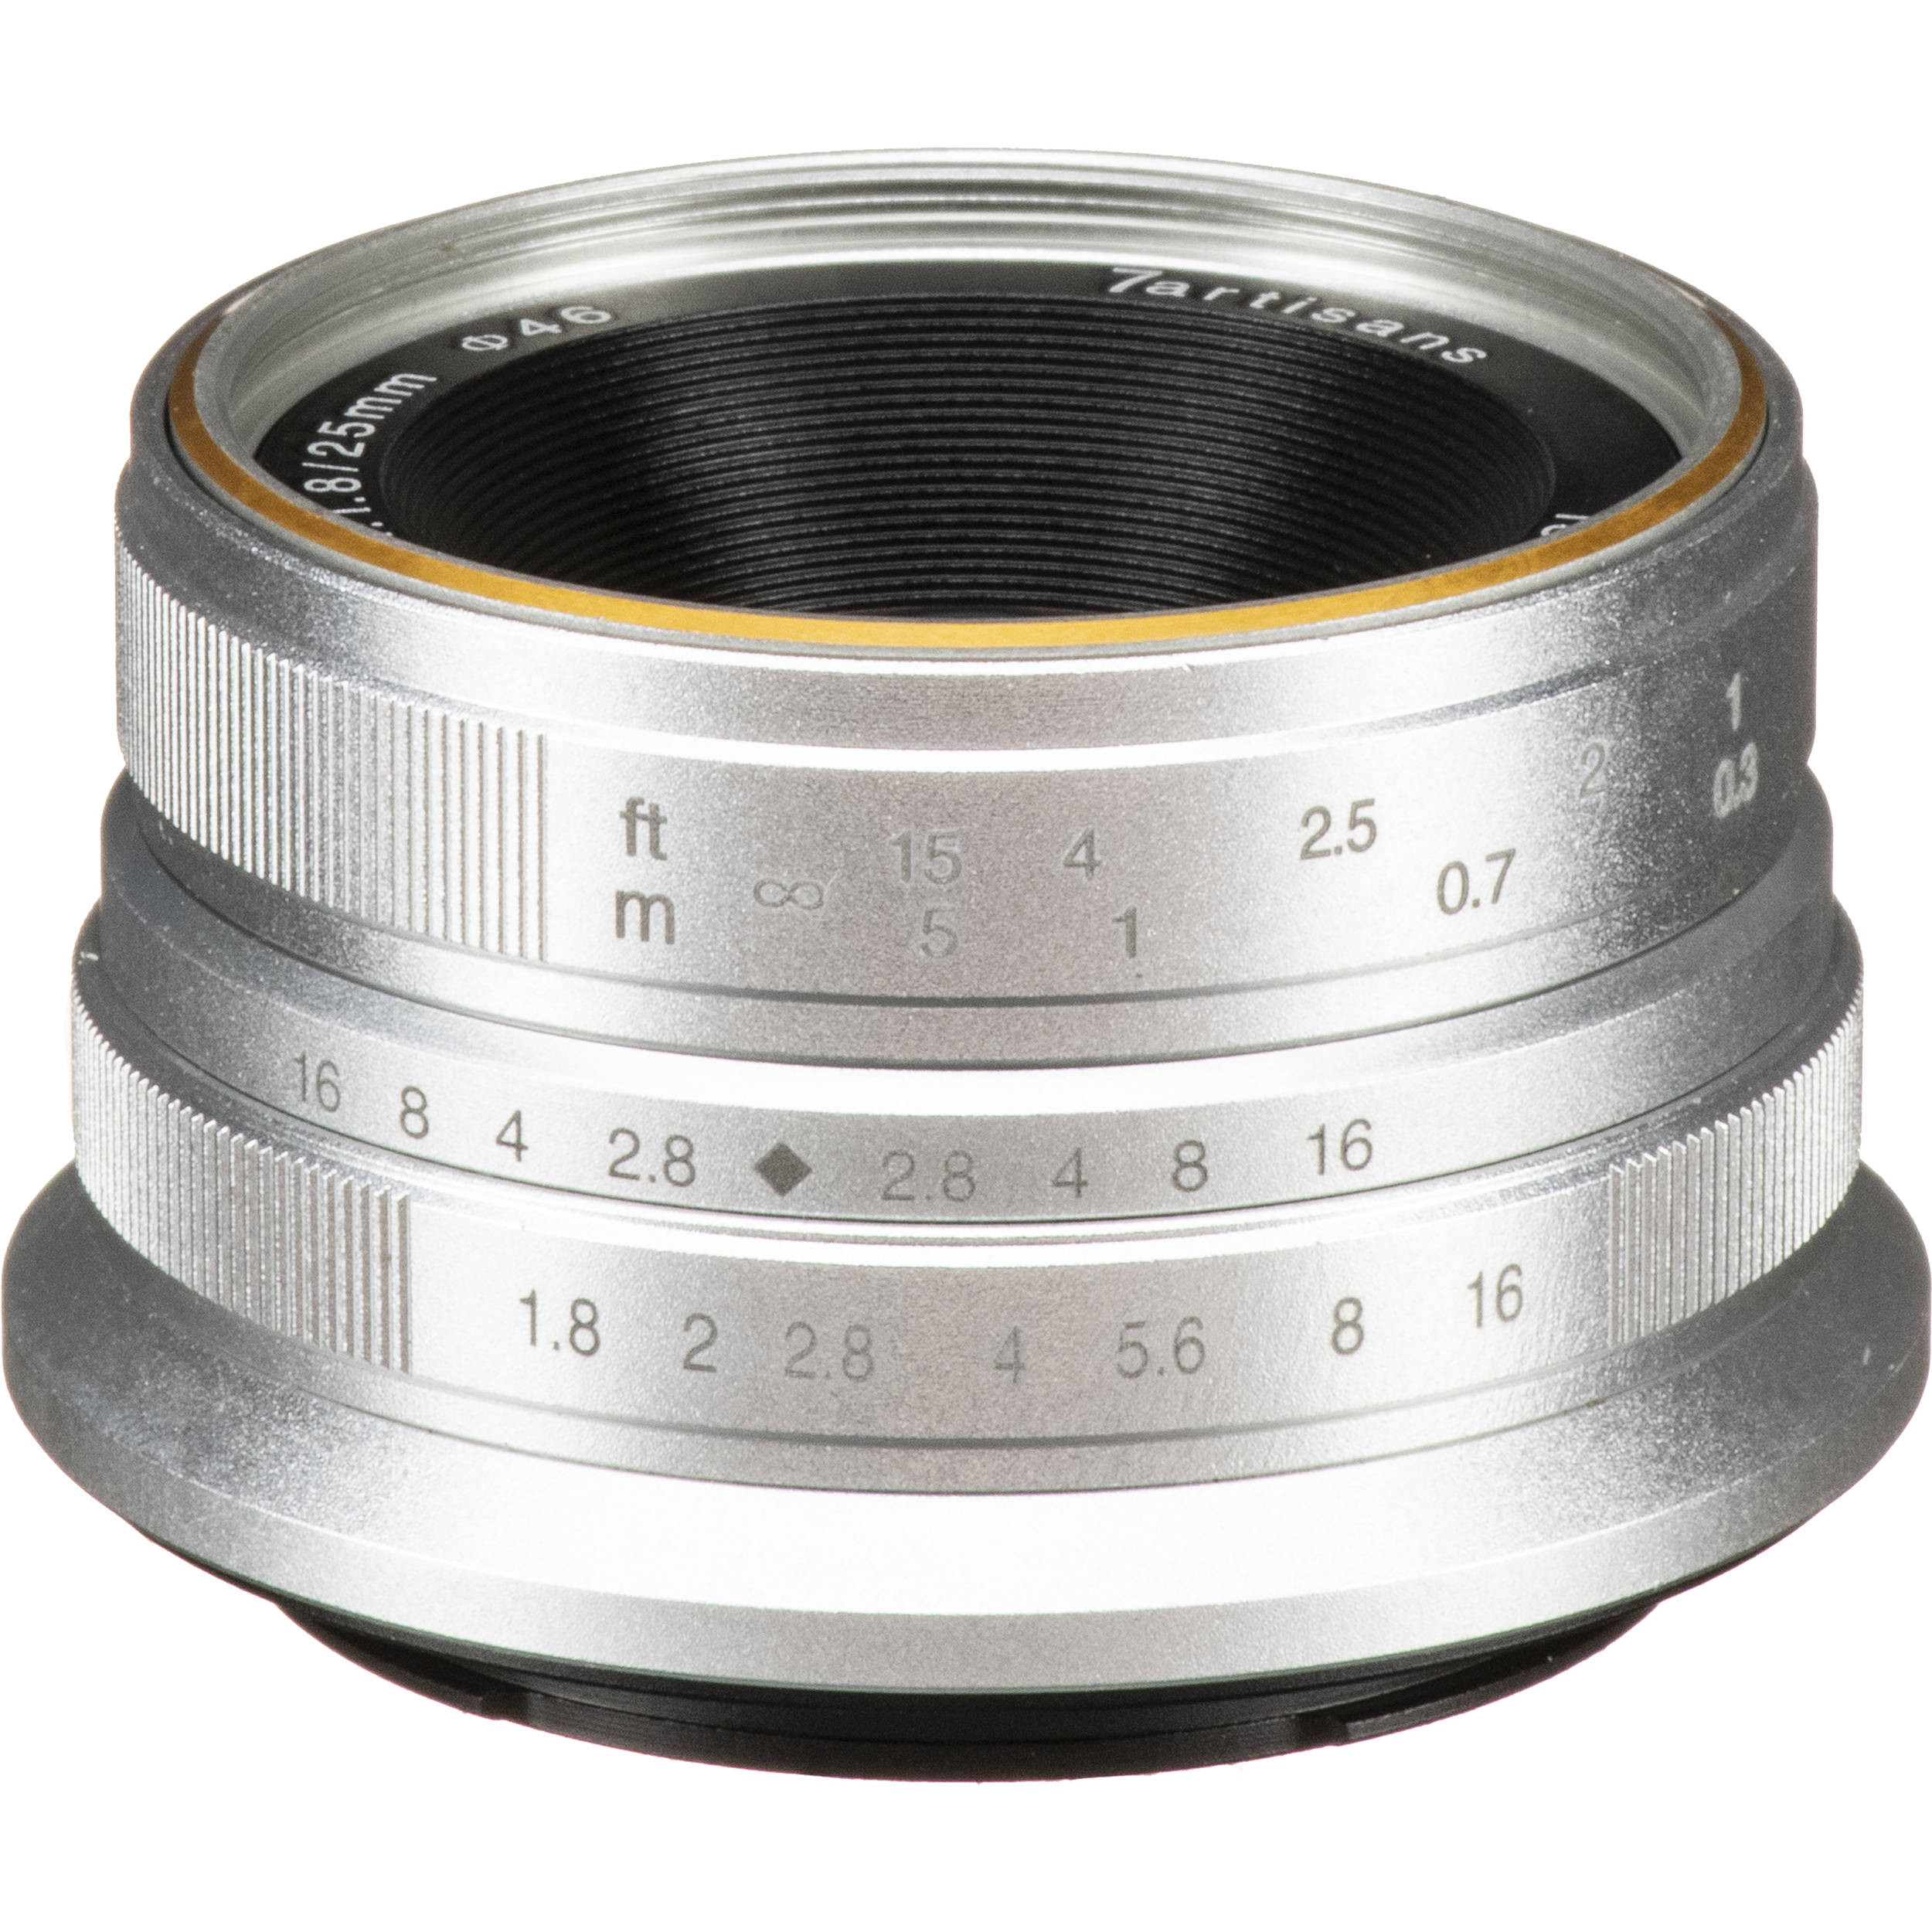 7Artisans 25mm f/1.8 Manual Focus Lens Silver (Sony E Mount)